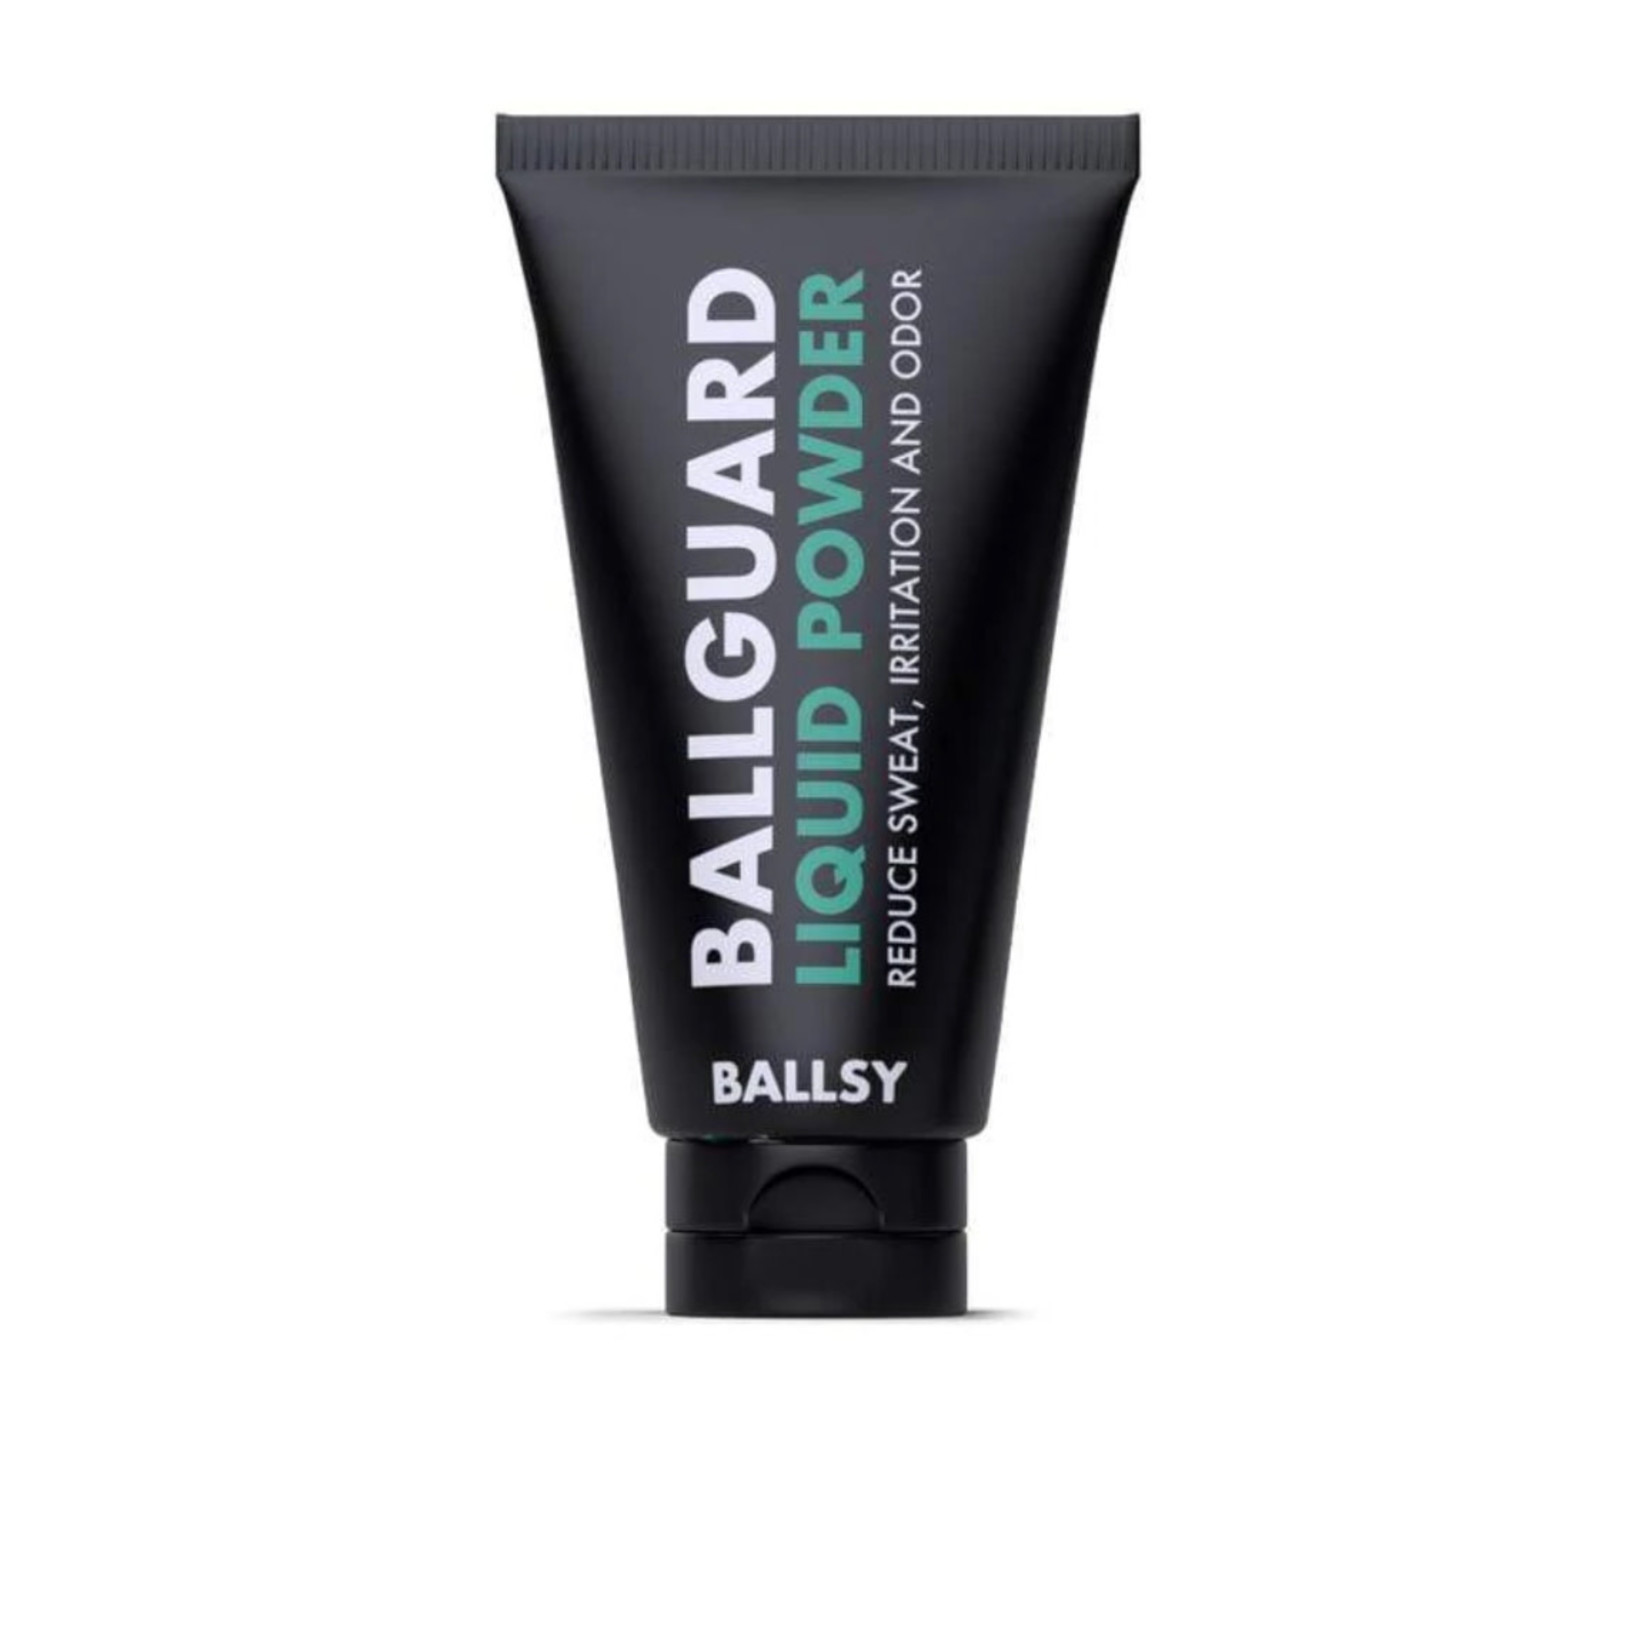 Ballsy Ballguard Liquid Powder